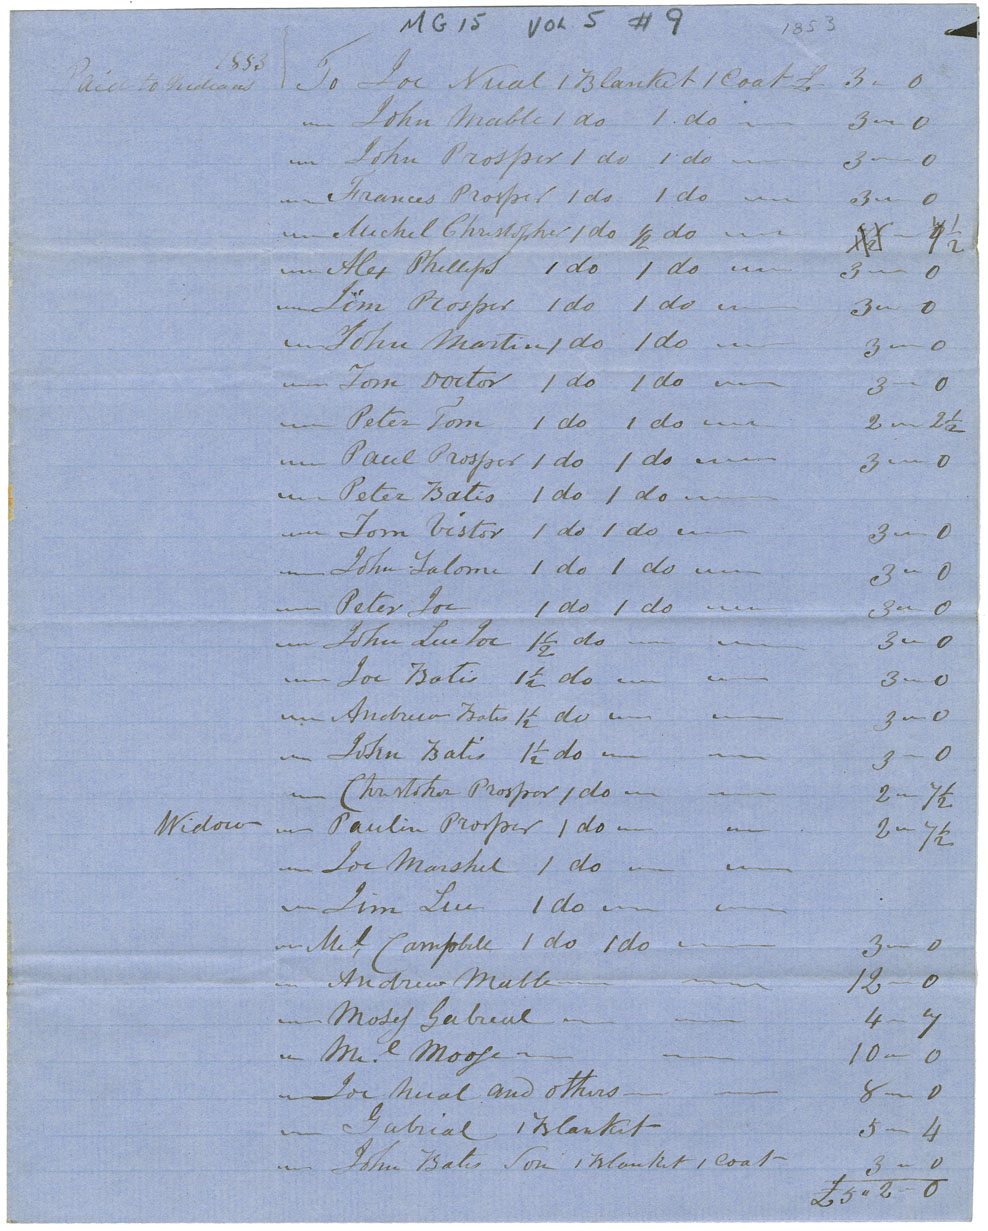 Full account of monies paid to Mi'kmaq in Sydney County by John McKinnon.